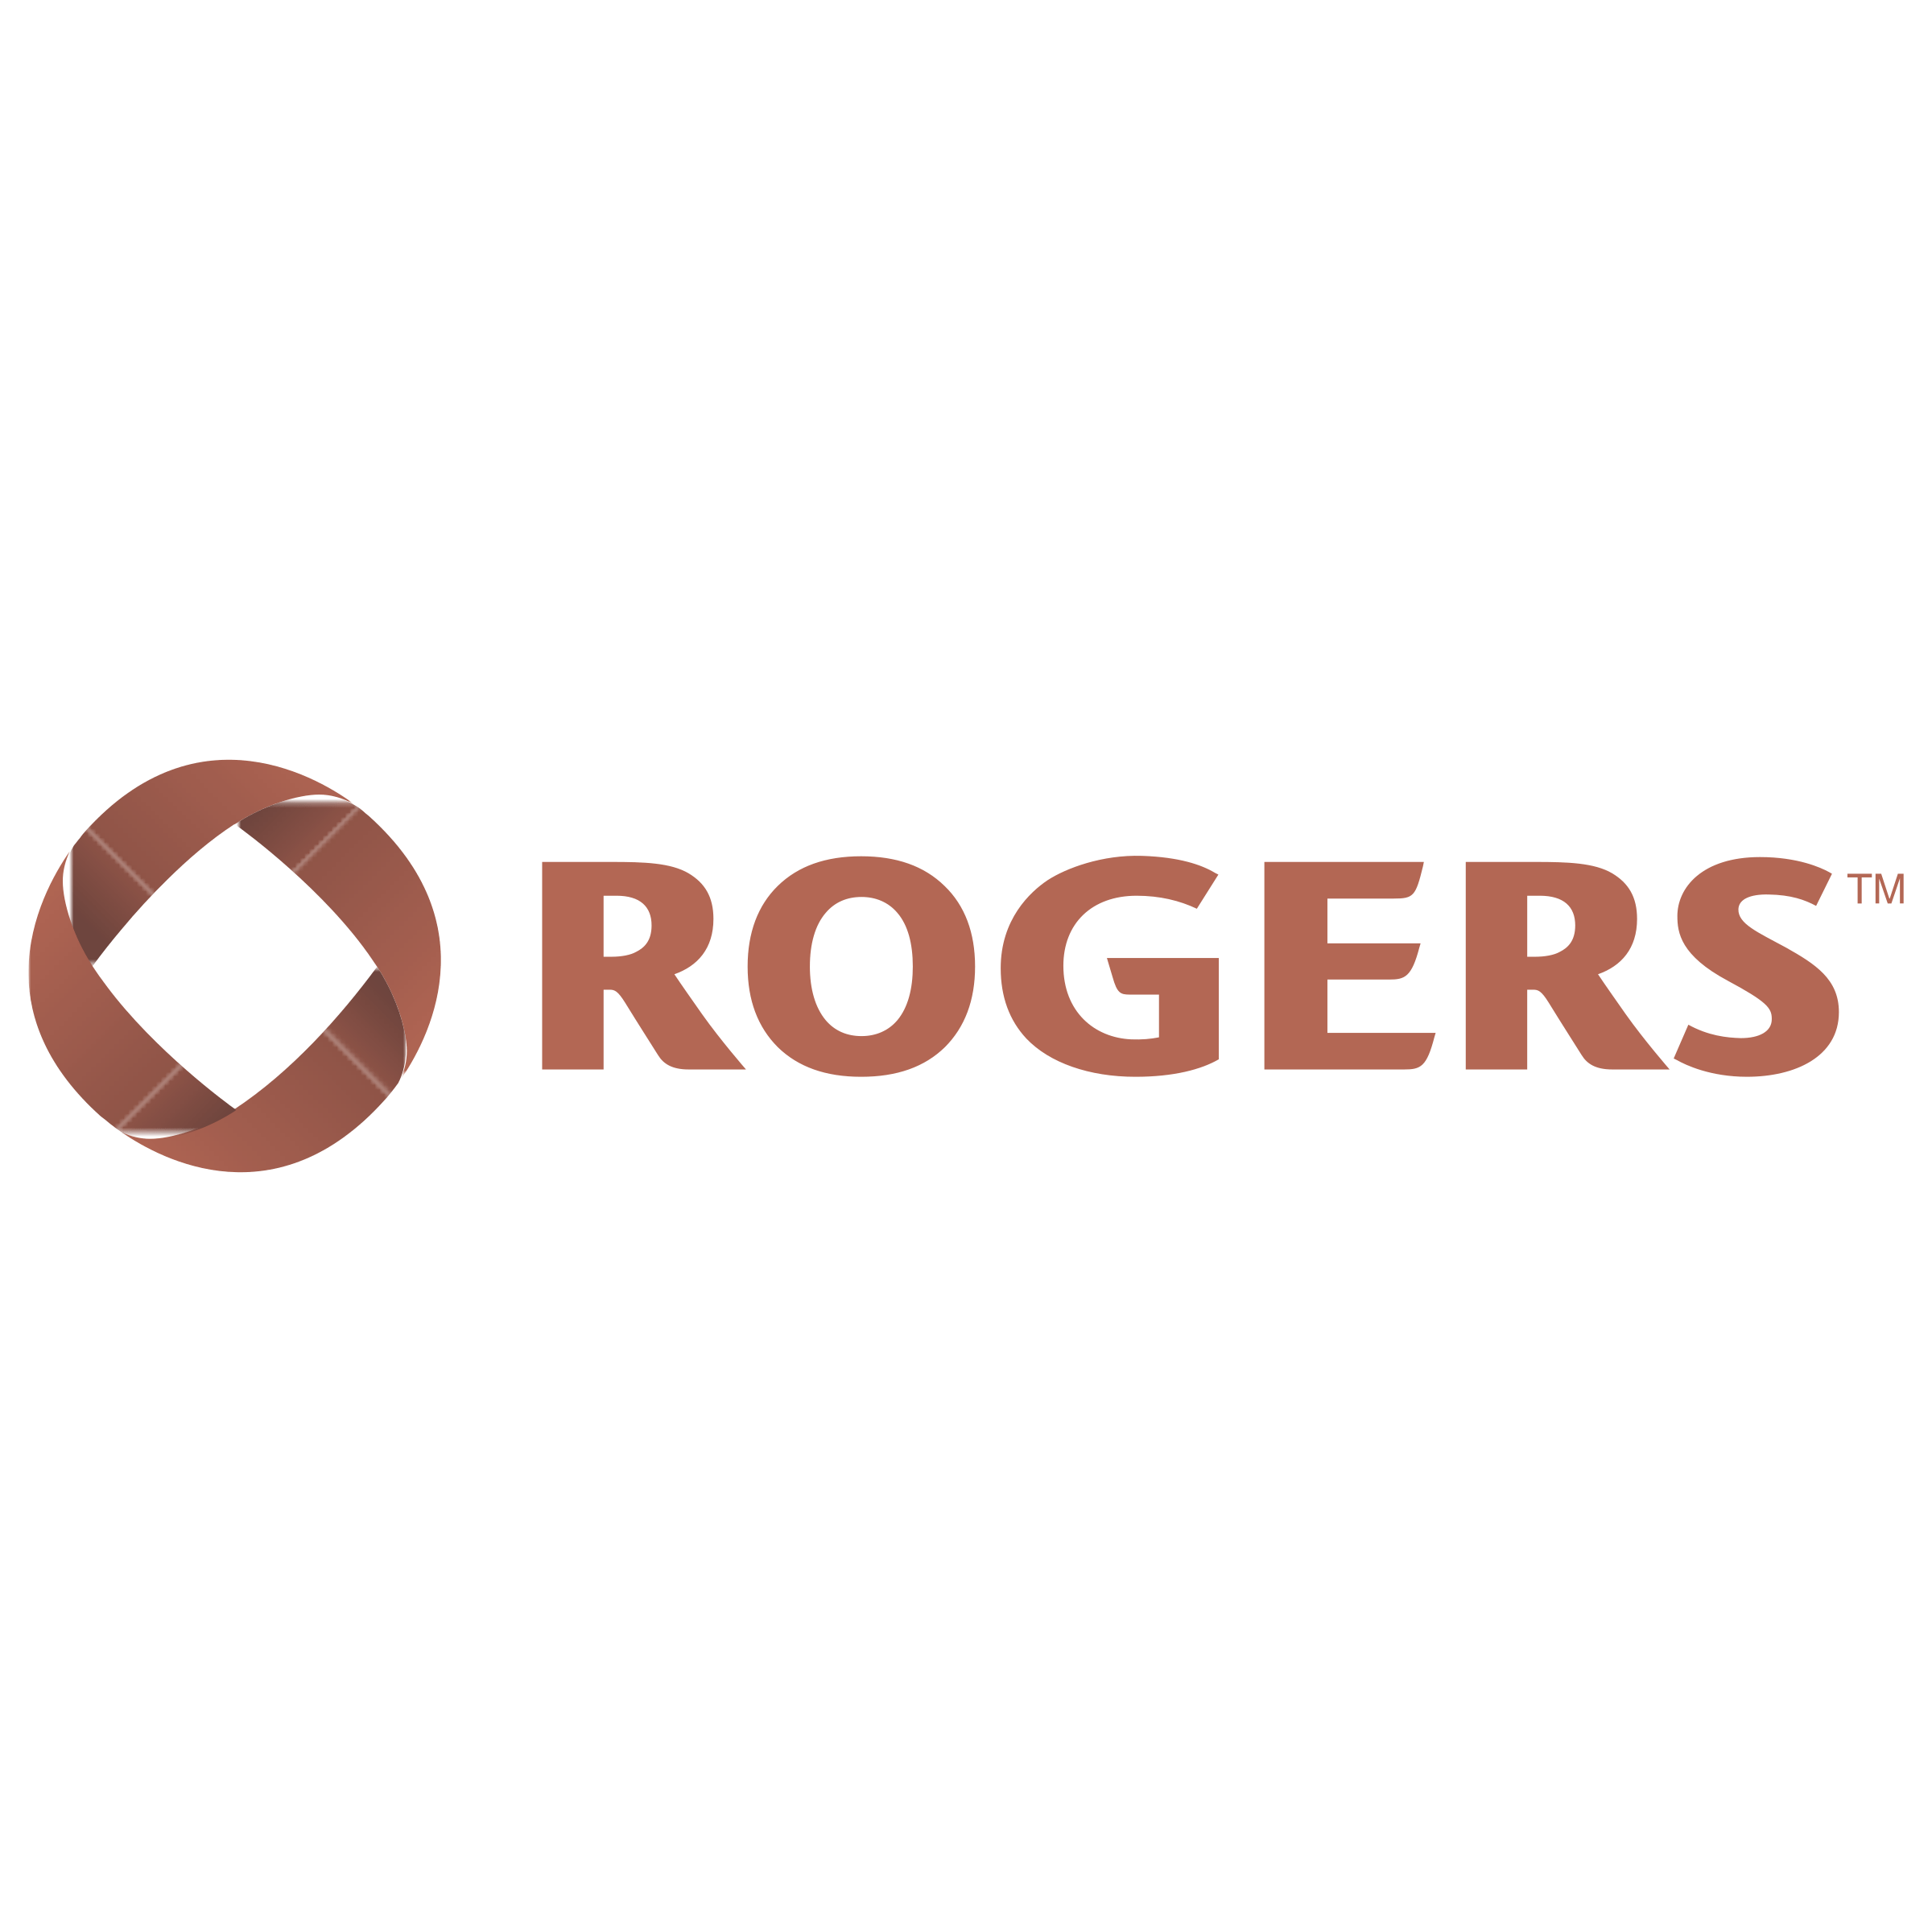 Rogers Logo - Rogers Logo PNG Transparent & SVG Vector - Freebie Supply